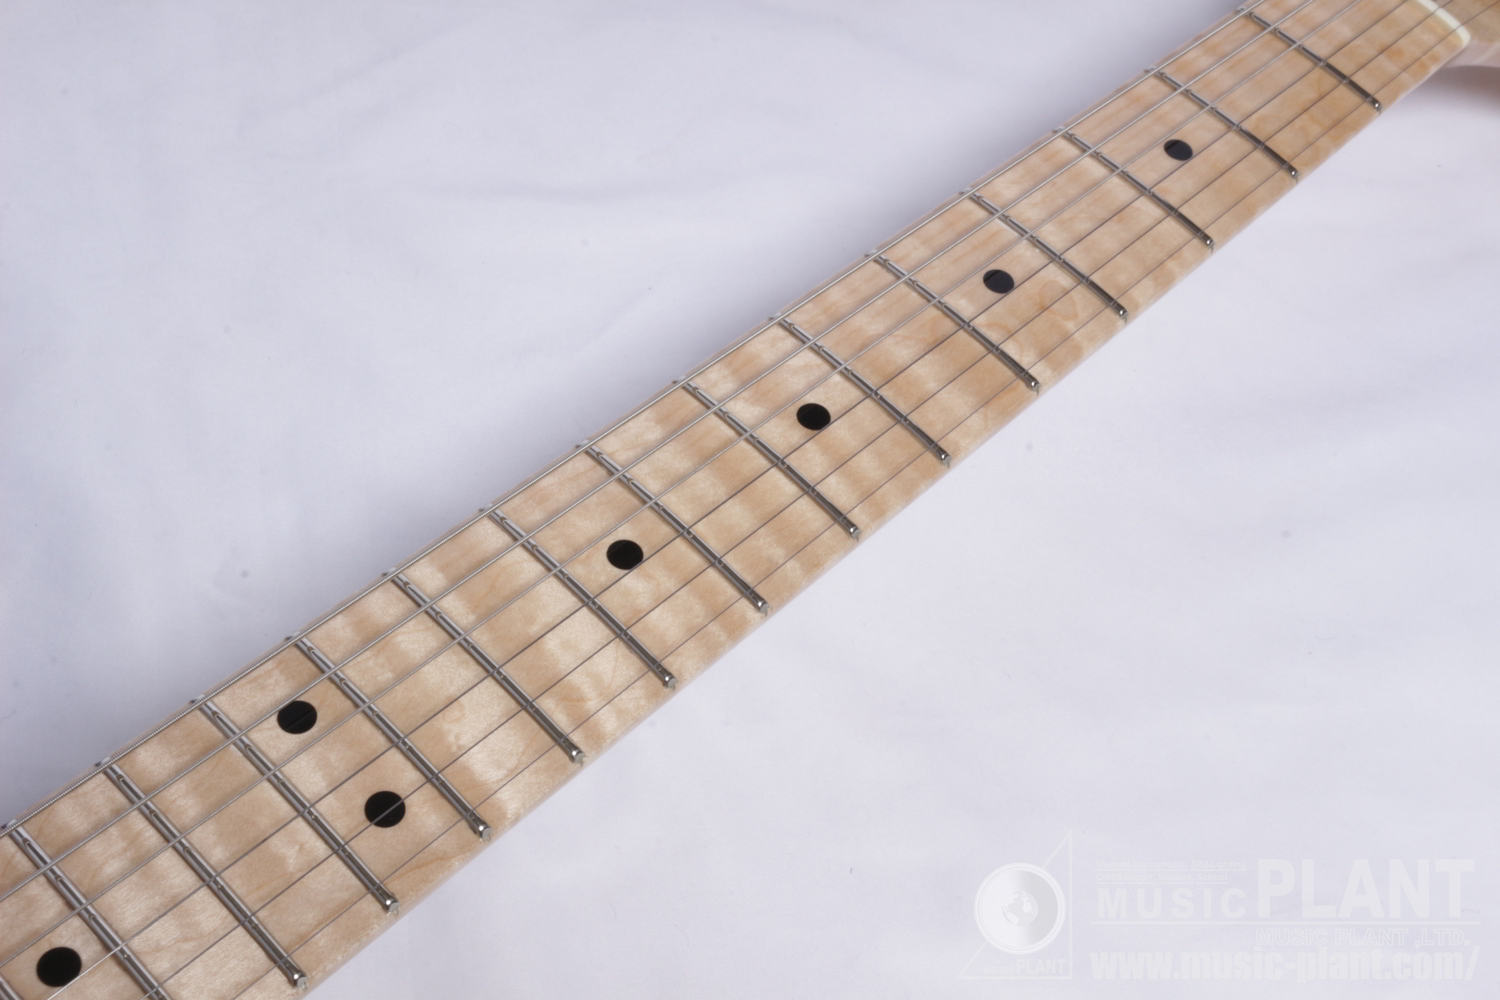 Custom Stratocaster Quilt Maple Top NOS, Faded Cobalt Blue Transparent追加画像